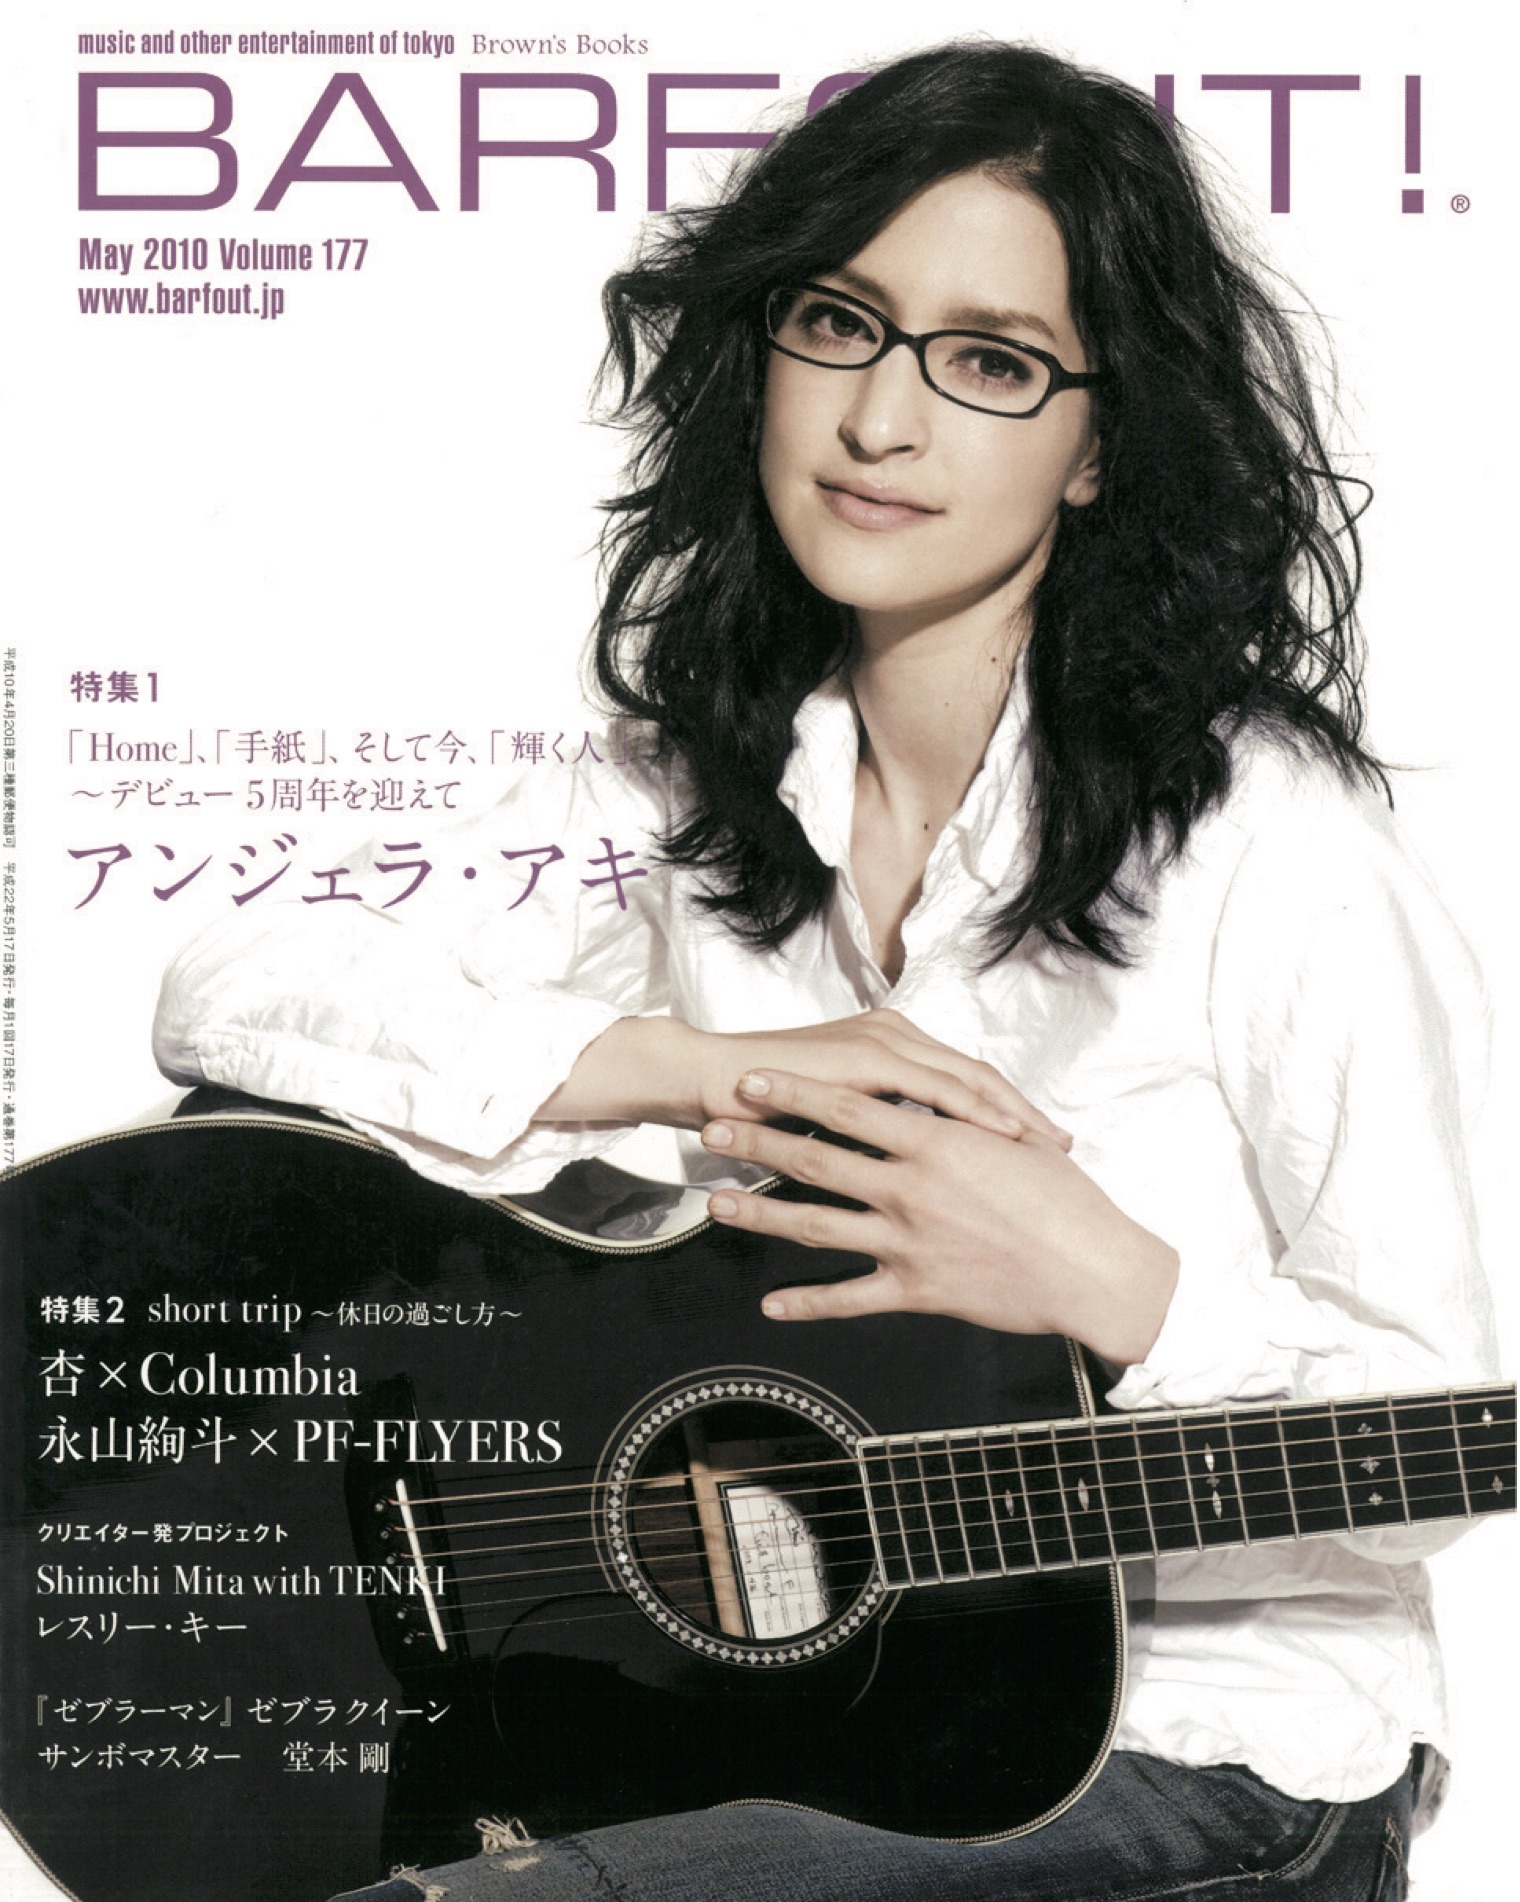 MAY 2010 VOLUME 177